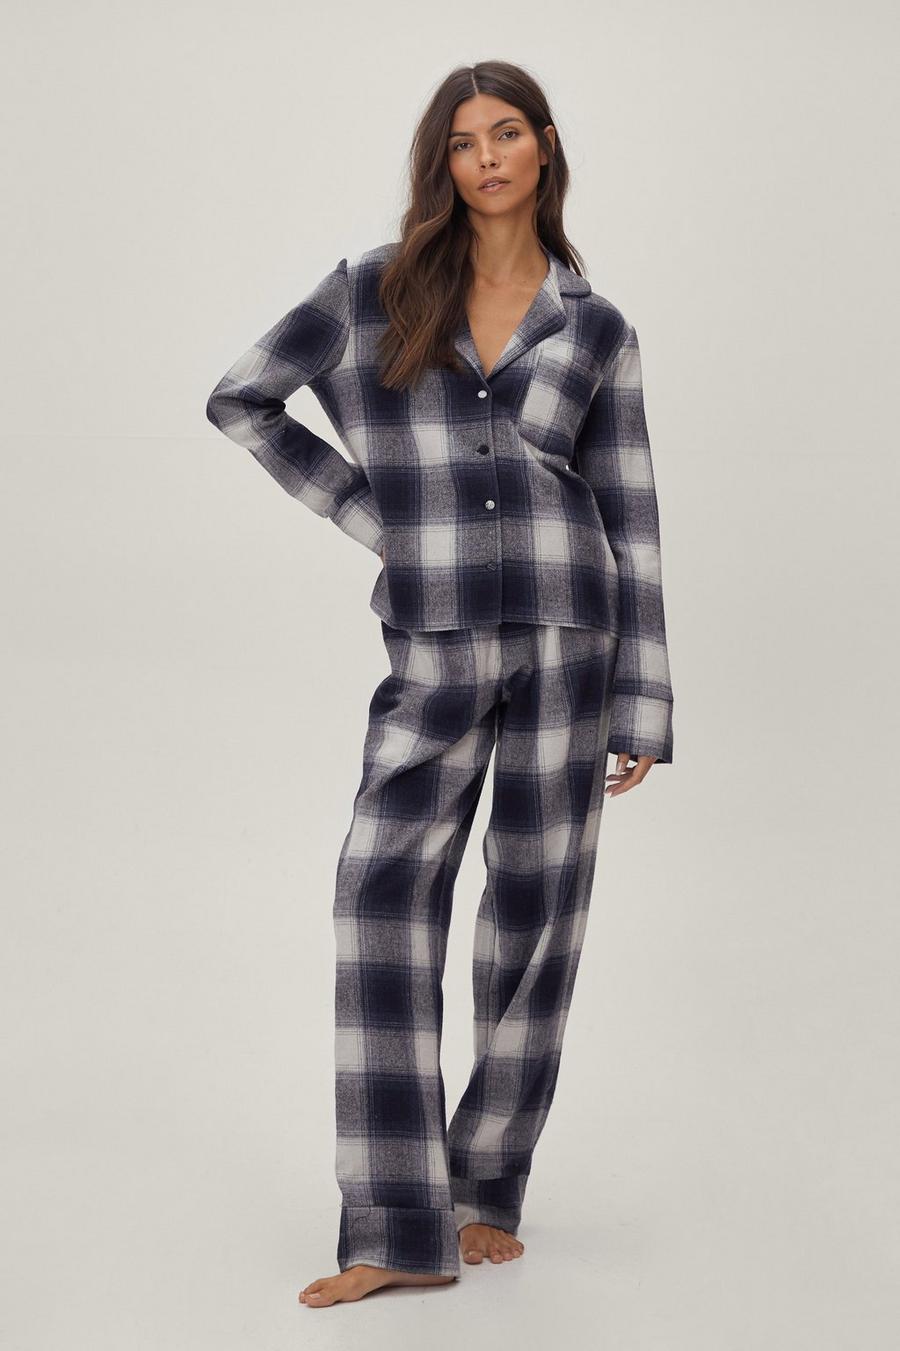 Kleding Dameskleding Pyjamas & Badjassen Pyjamashorts & Pyjamabroeken Broek 100% Silk Pajama Set/ Cropped Shirt with Side Slit Lounge Pant/Navy/Cream/great gift for her 